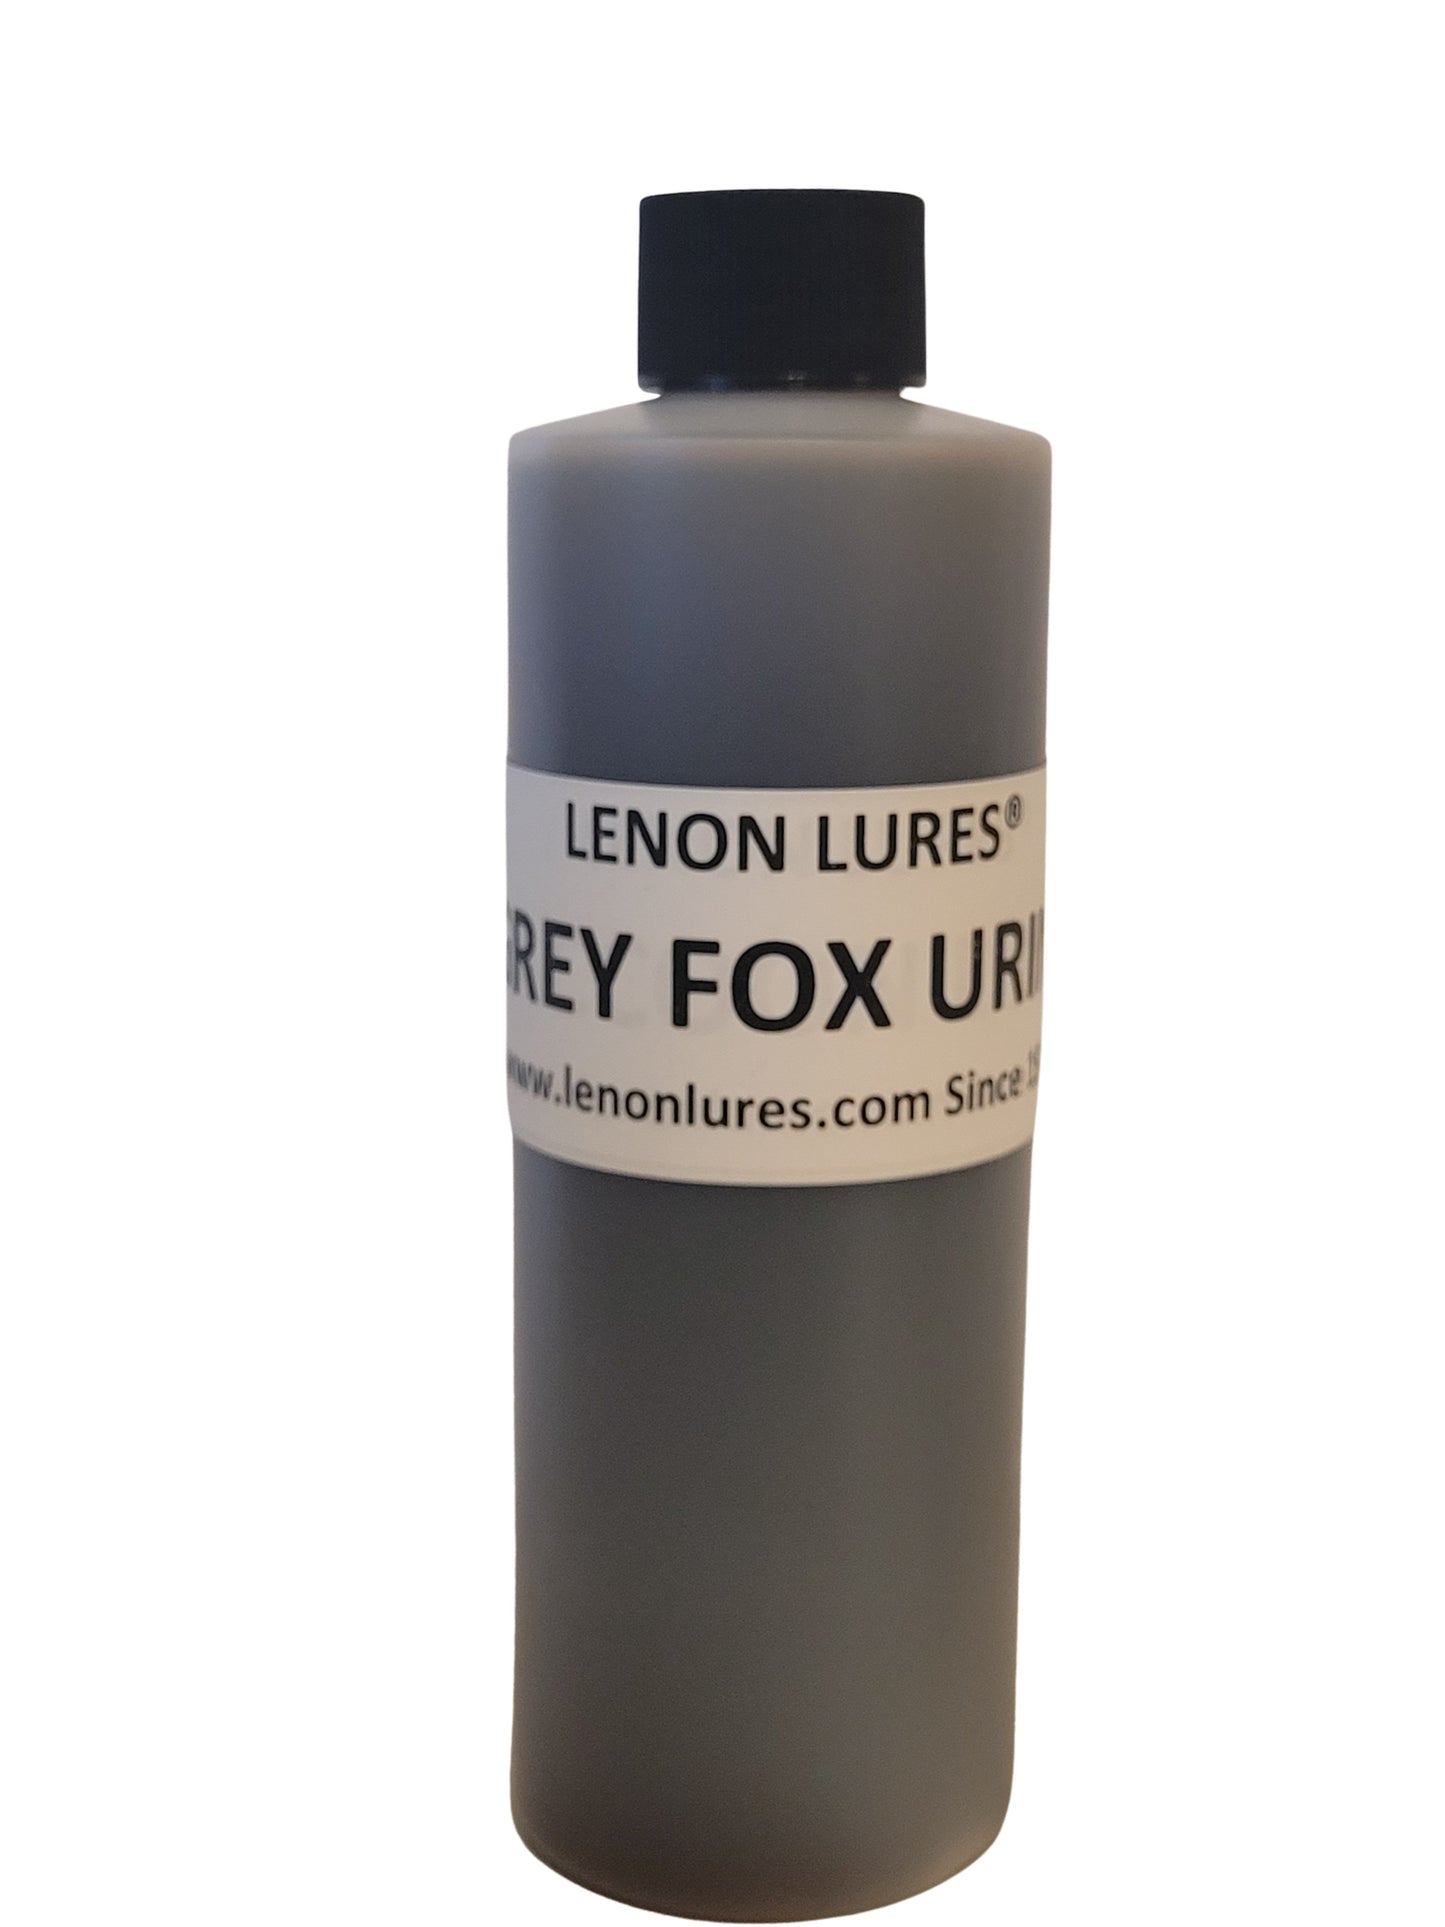 Lenon's Grey Fox Urine